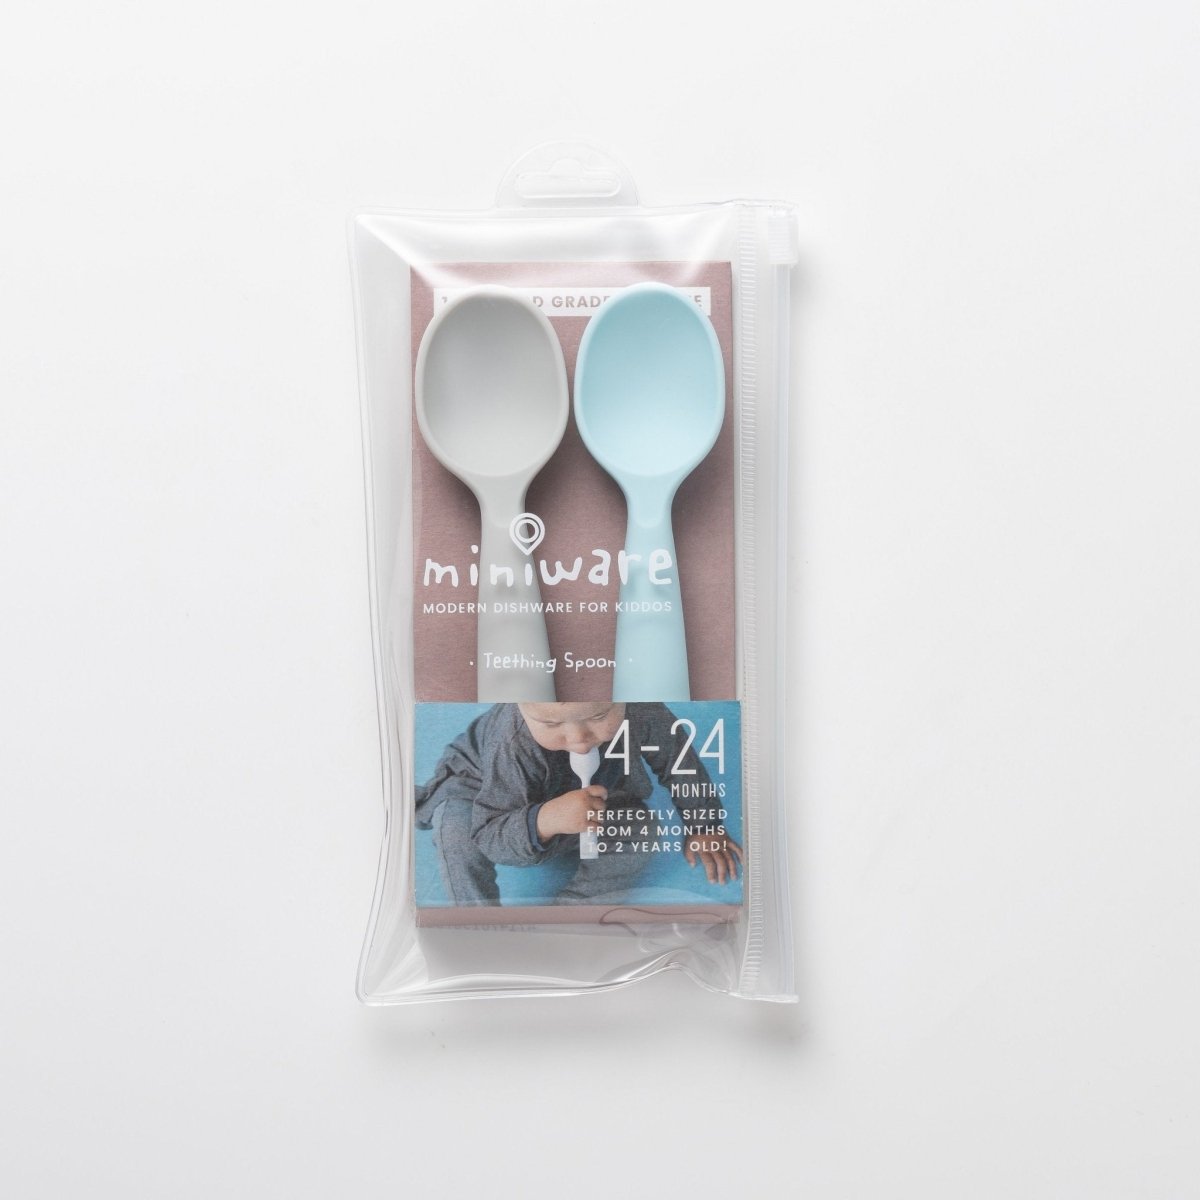 Miniware Training Spoon Set - Grey and Aqua - MWTSGA